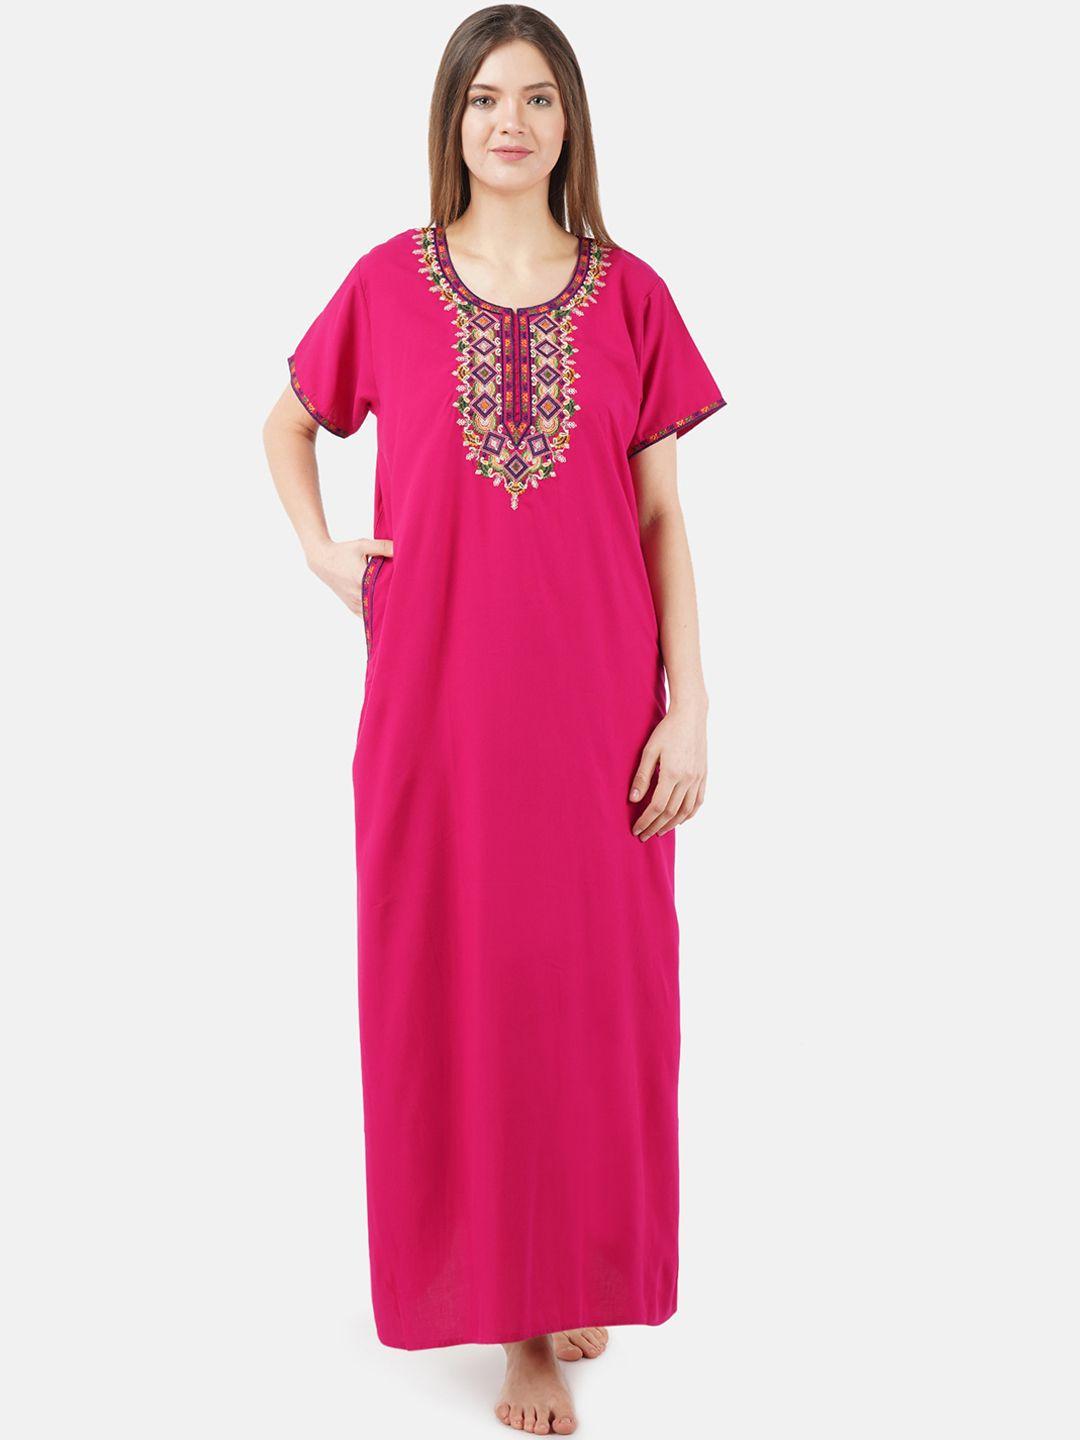 koi sleepwear pink embroidered lissybissy cotton maxi nightdress